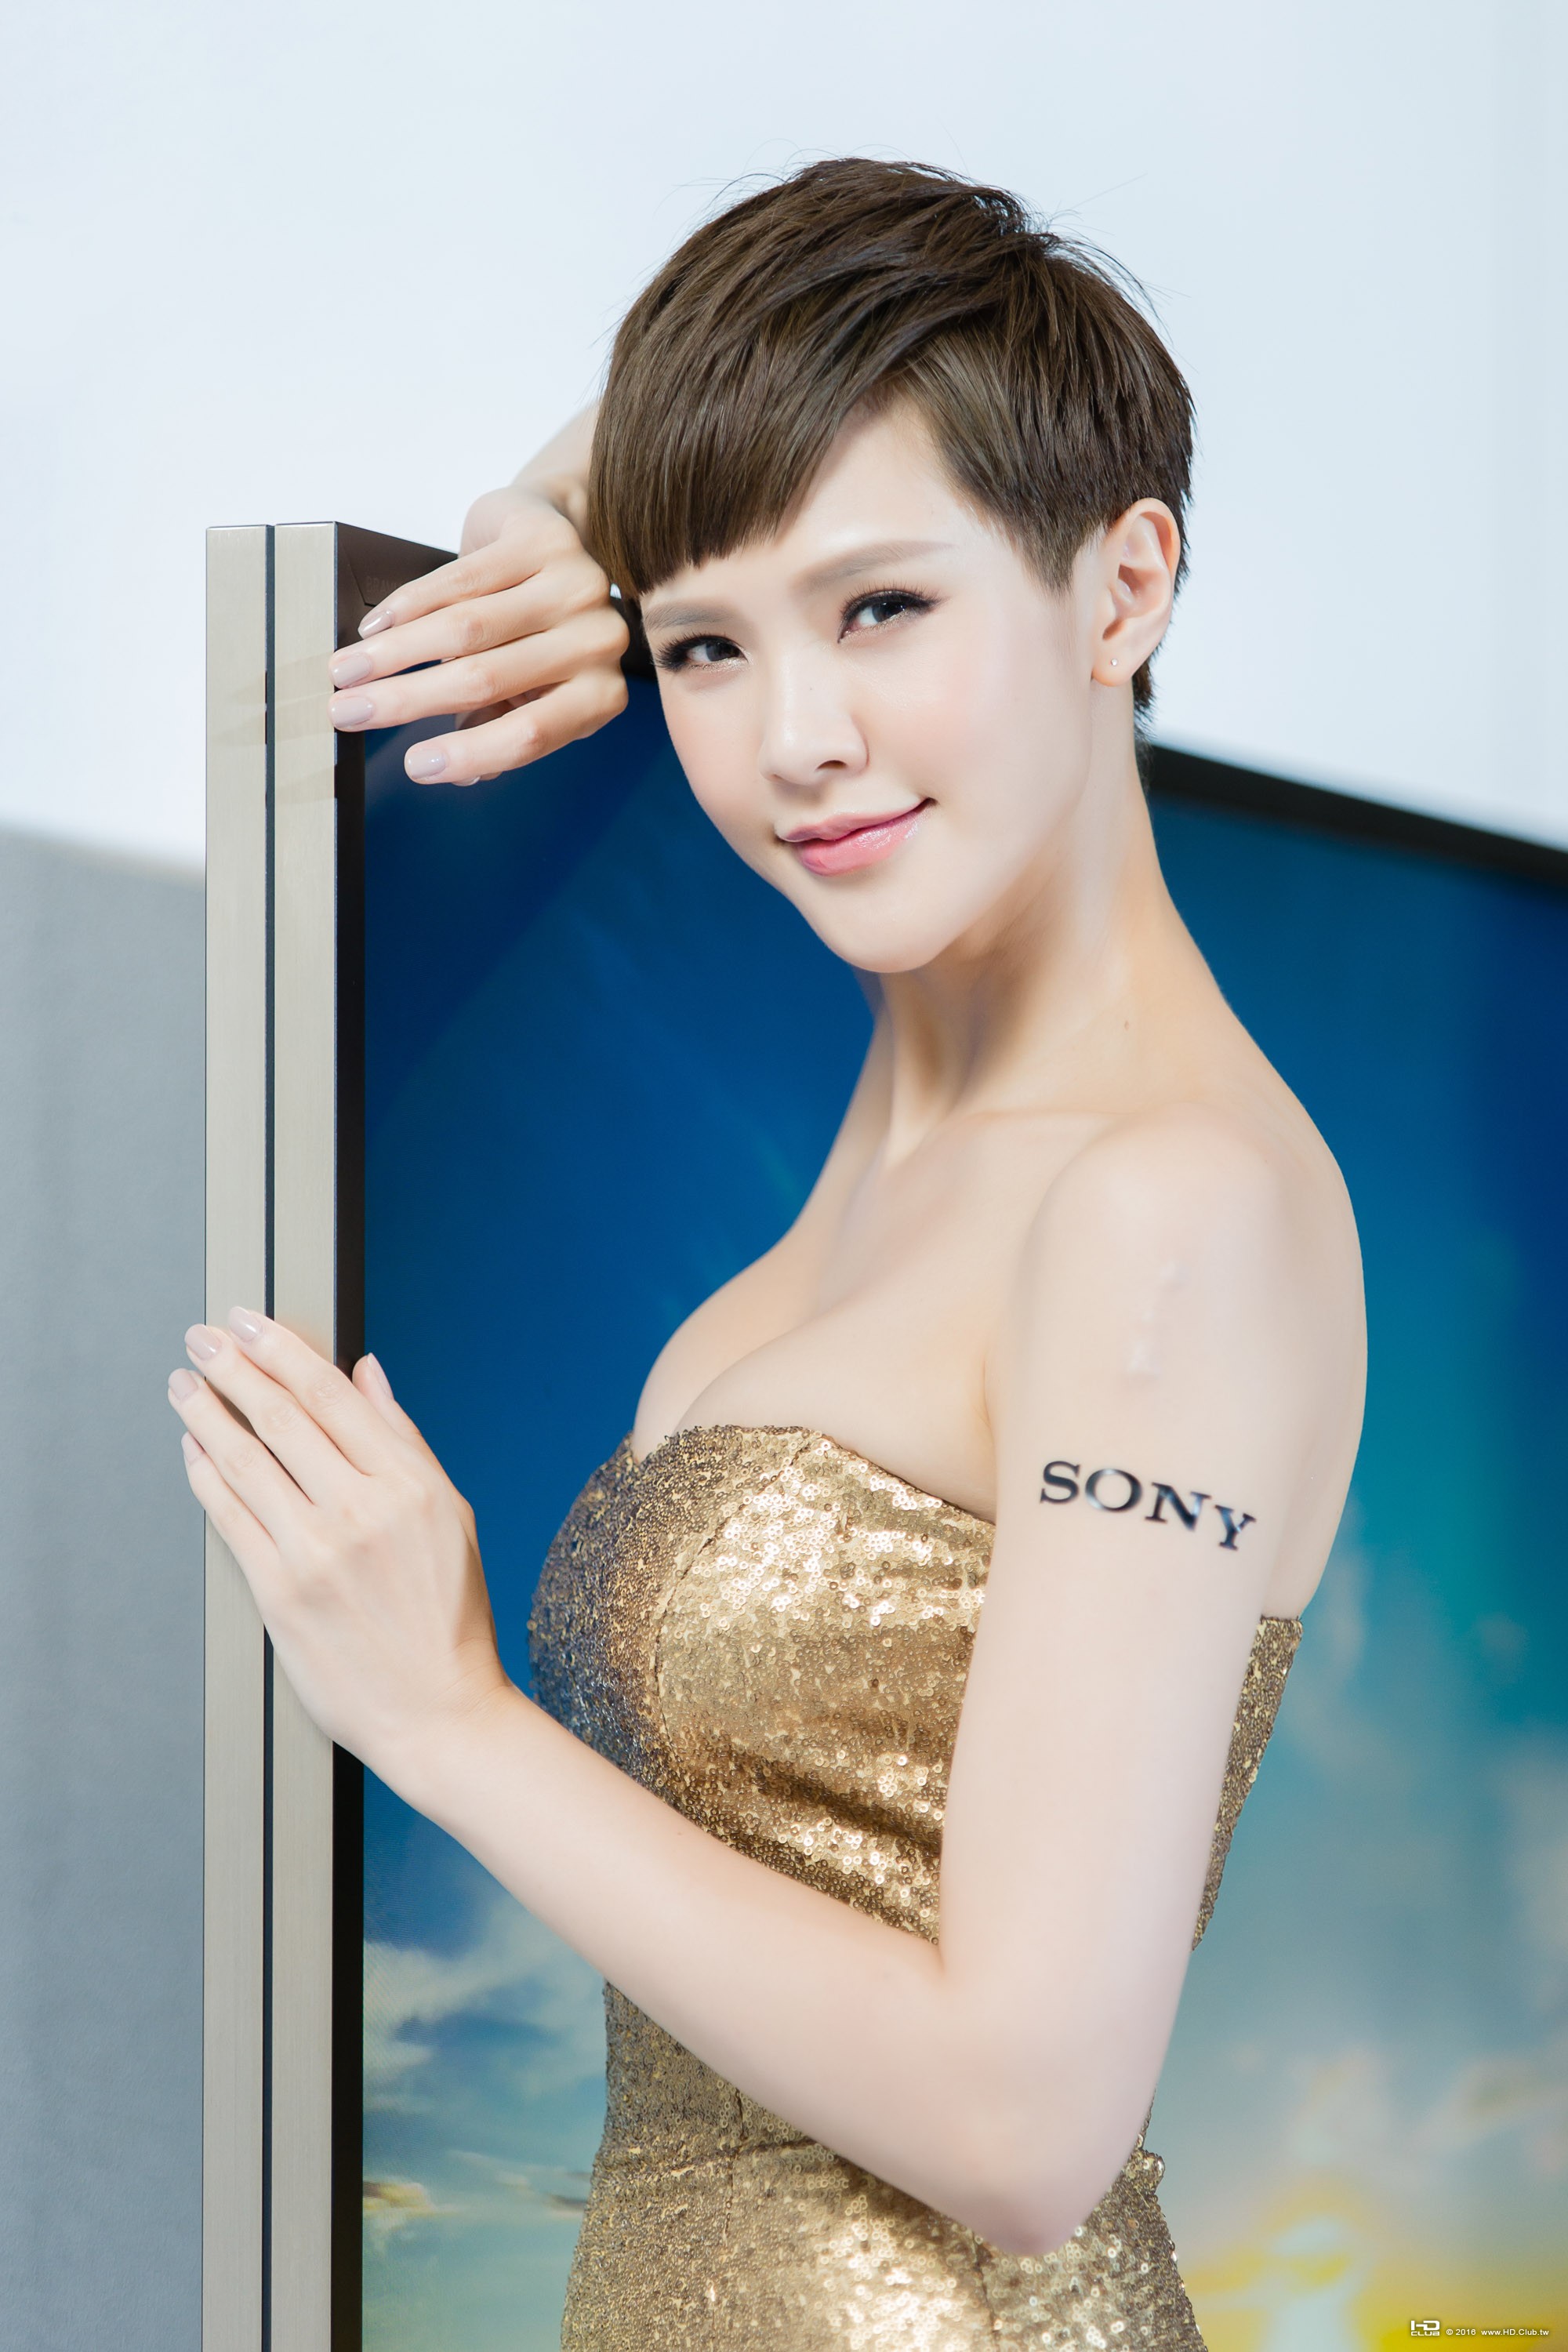 5. Sony BRAVIA液晶電視Z9D系列，側邊淡金色線條突顯出低調奢華的質感.jpg.jpg